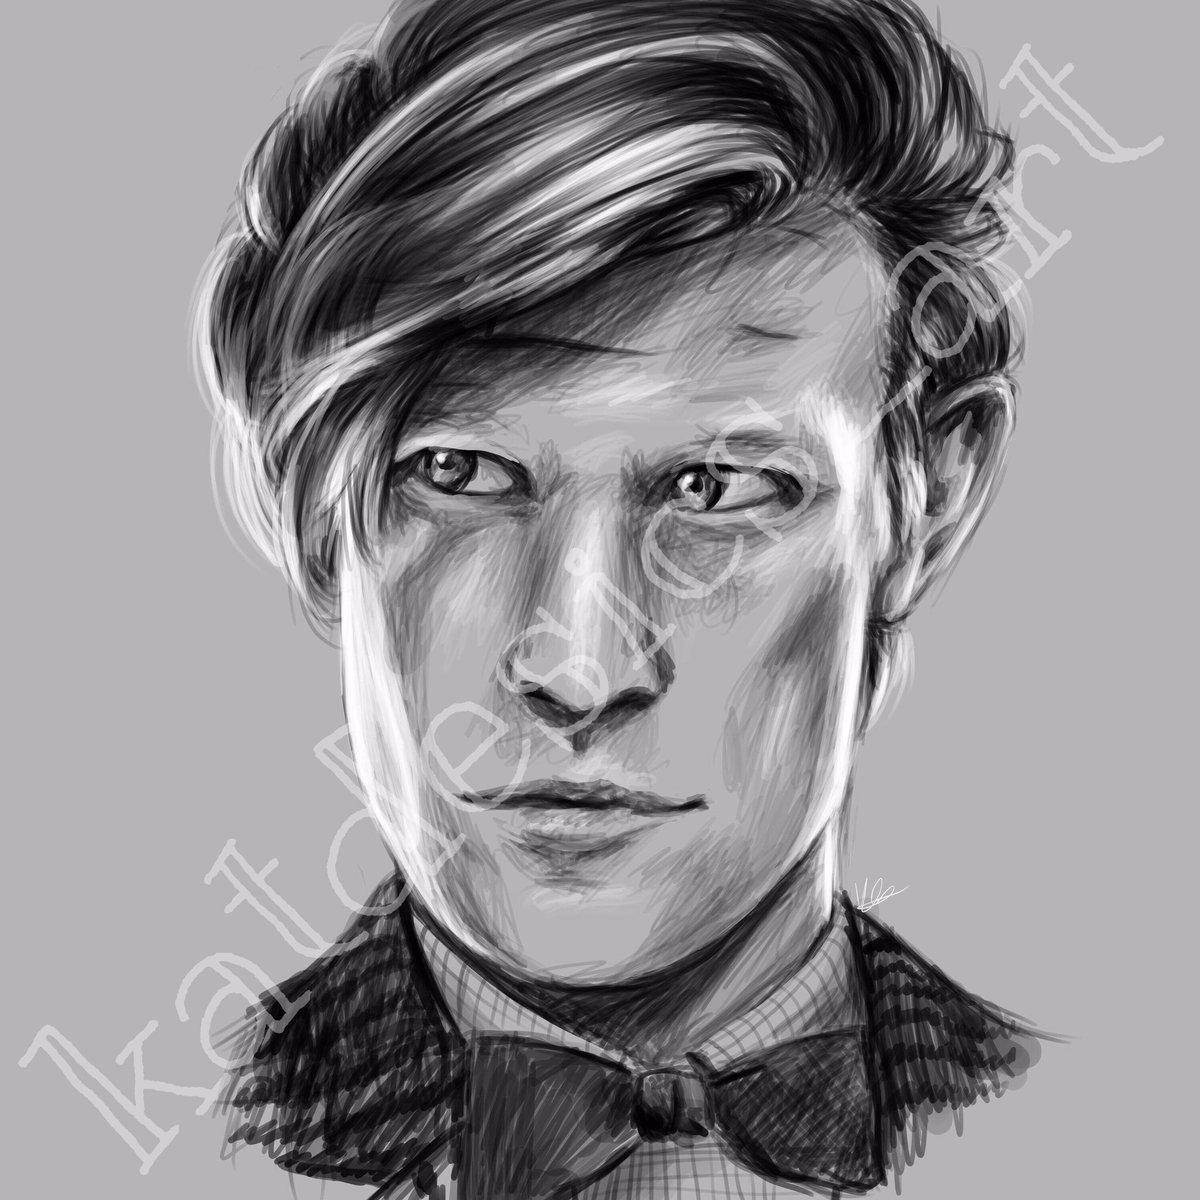 Matt Smith as the 11th Doctor #art #artist #portrait #realism #mattsmith #doctorwho #drwho #11thdoctor #realismportrait #BBC #britishtv #digitalart #DigitalArtist